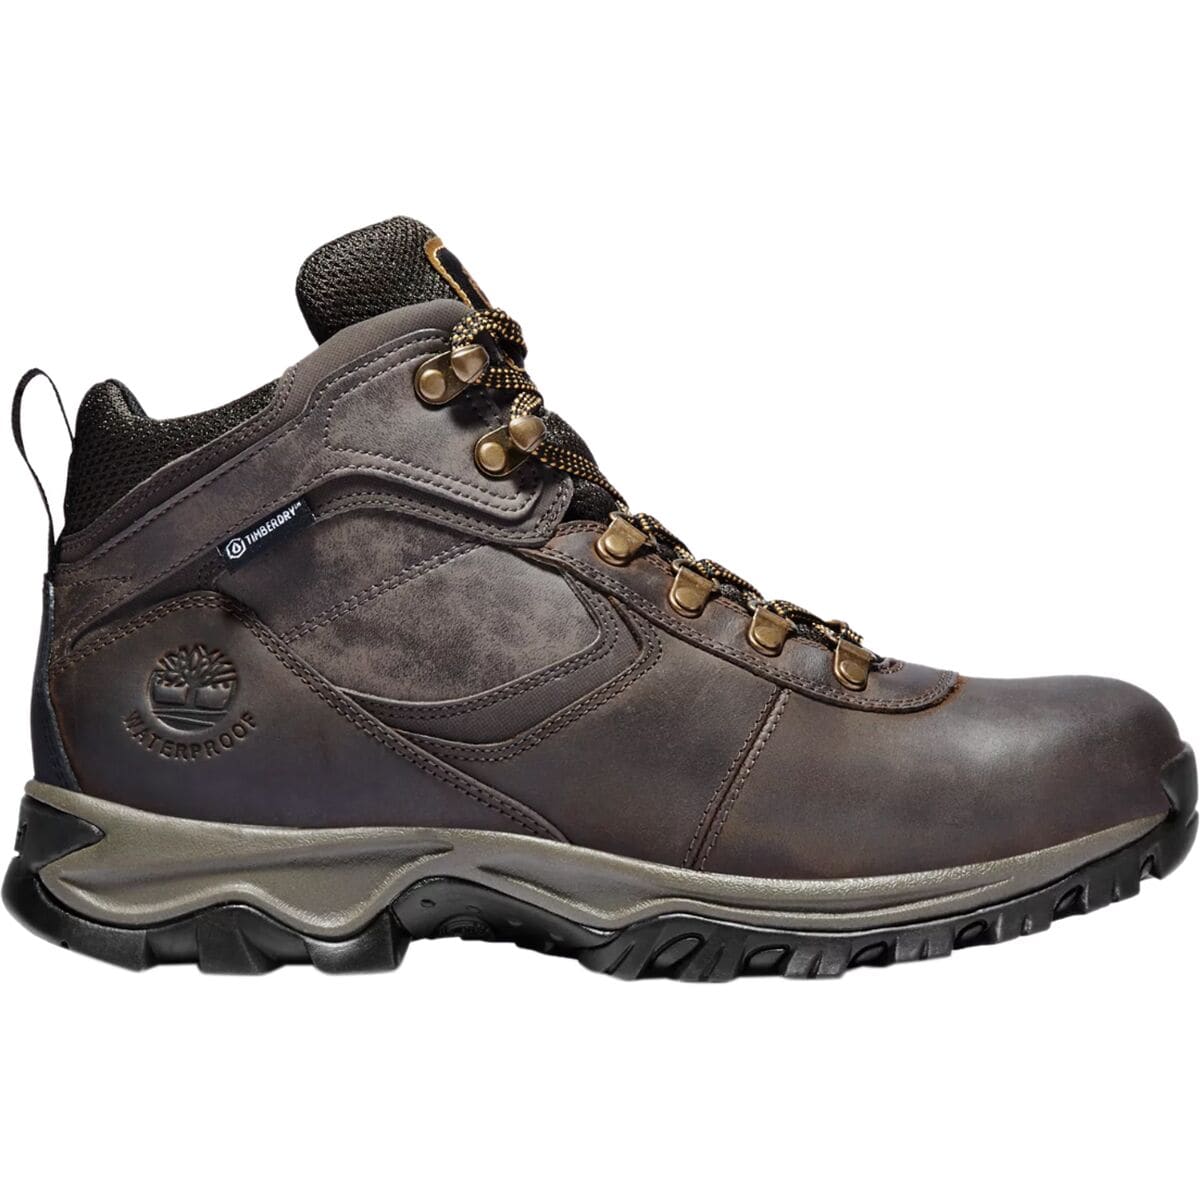 Timberland Mt. Maddsen Mid Waterproof Wide Hiking Boot - Men's